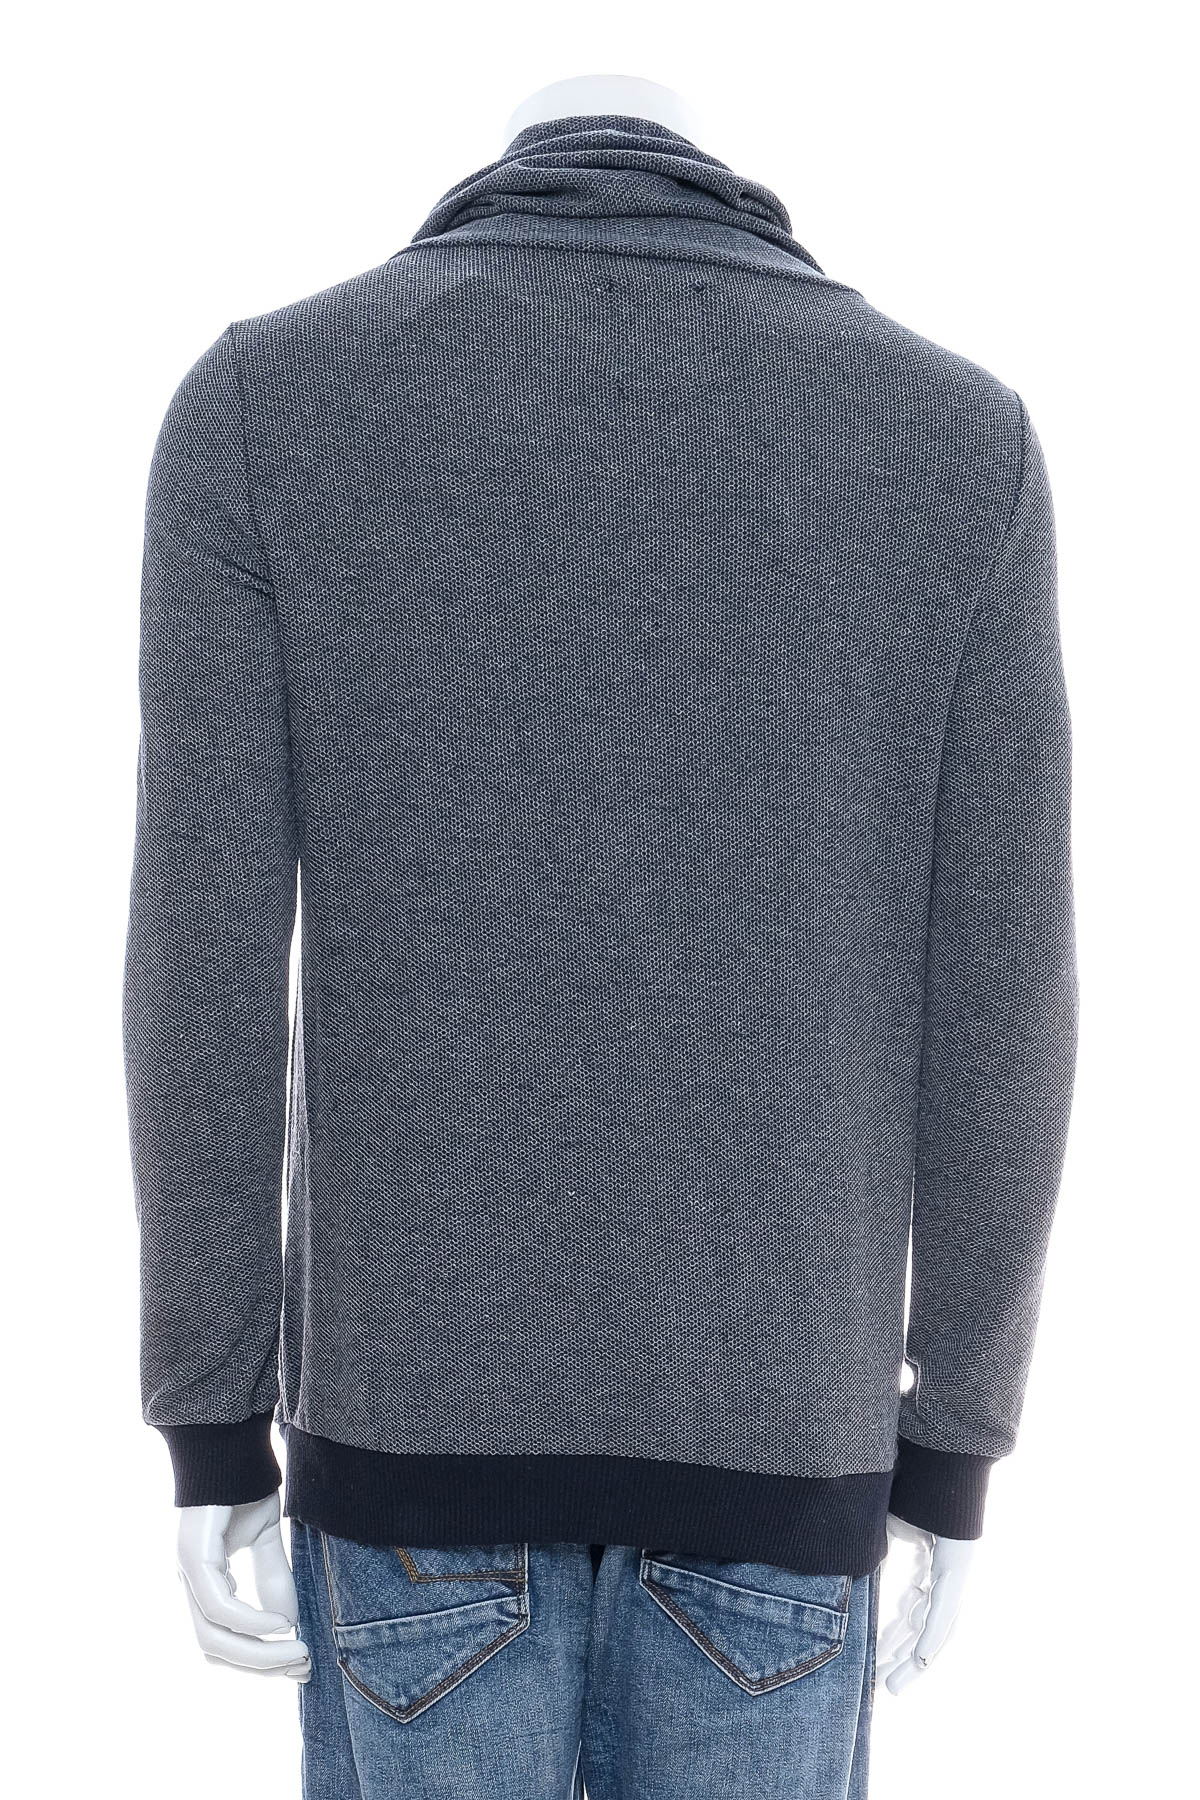 Men's sweater - Koton - 1